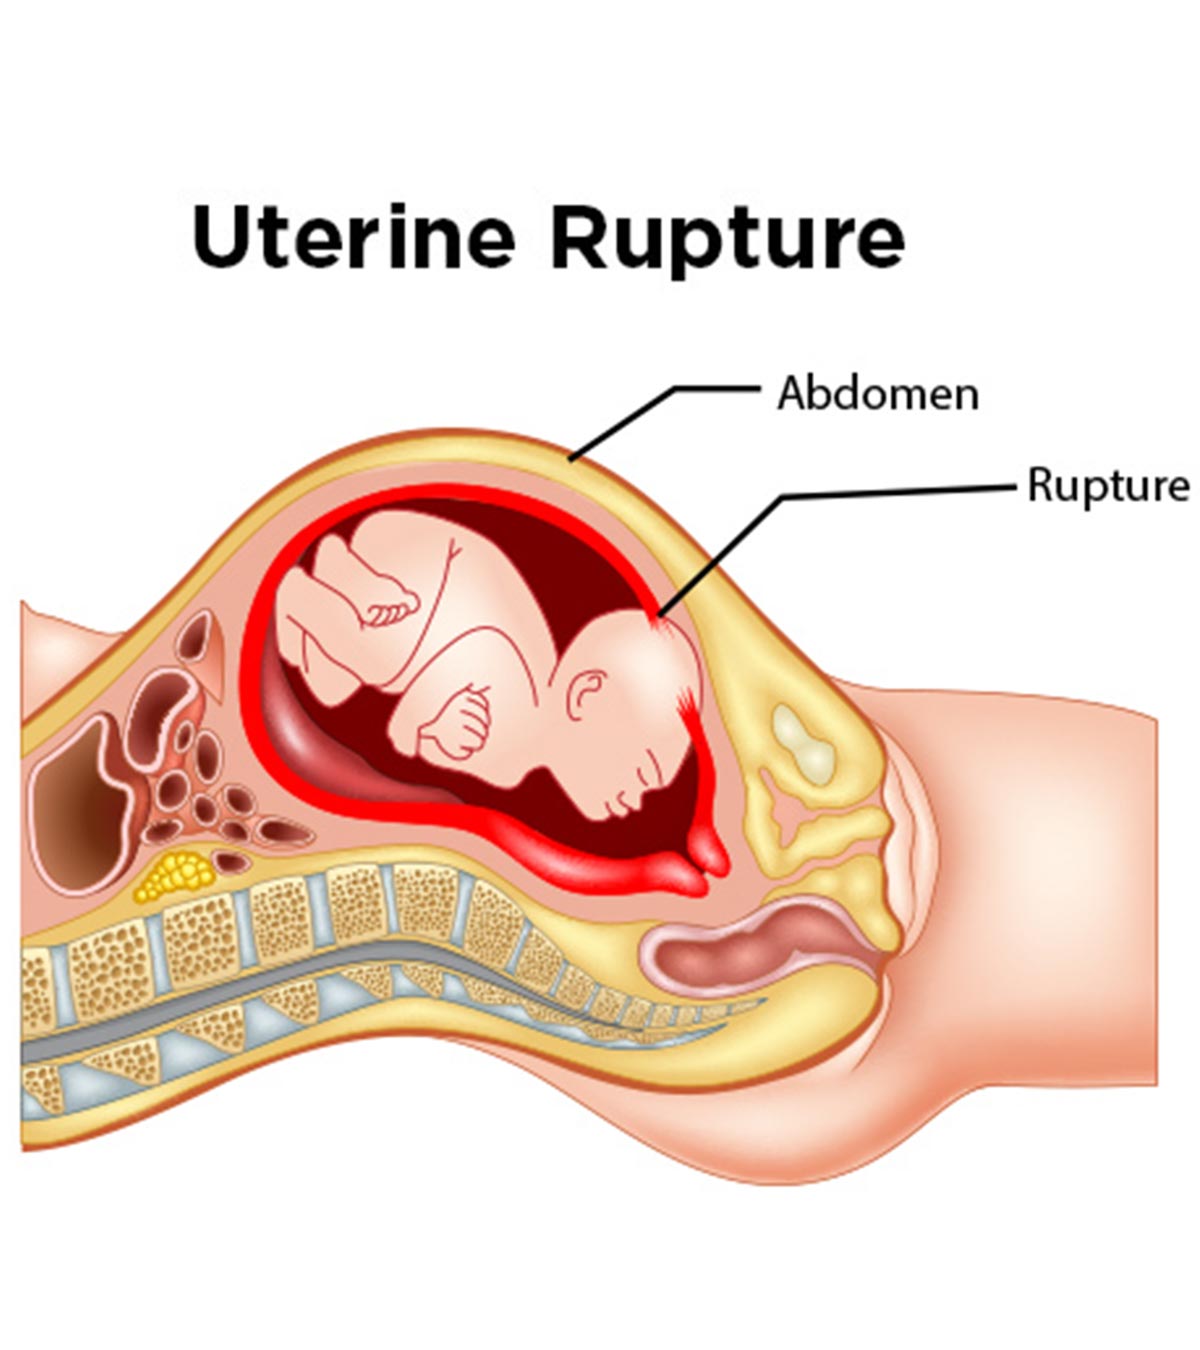 Uterine Rupture In Pregnancy: What It Is, Causes & Symptoms